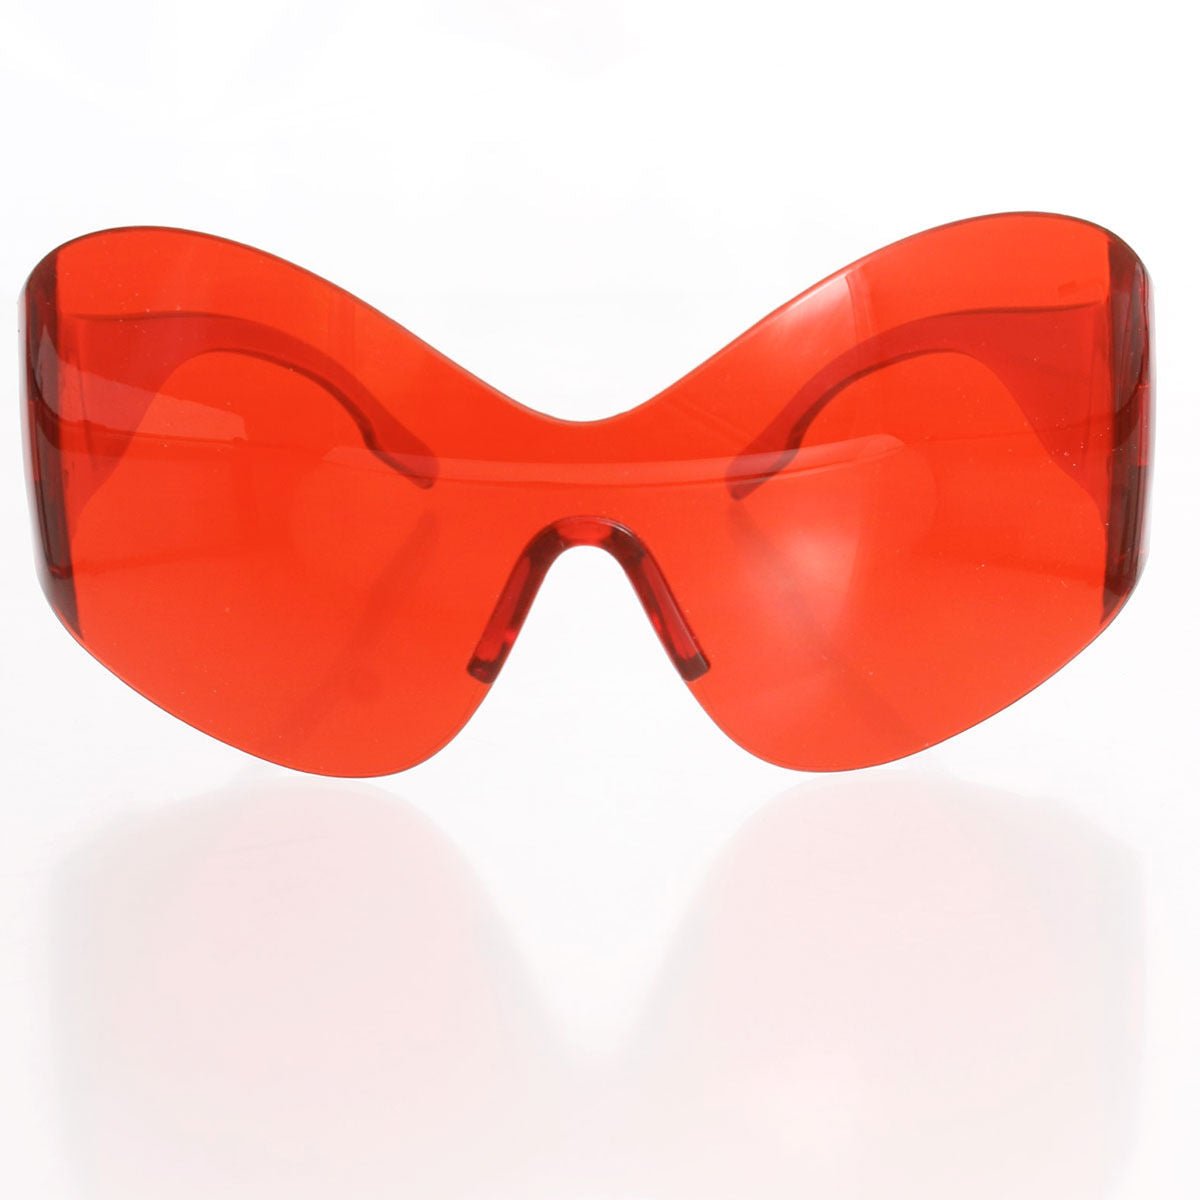 Sunglasses Butterfly Mask Red Eyewear for Women - Bae Apparel